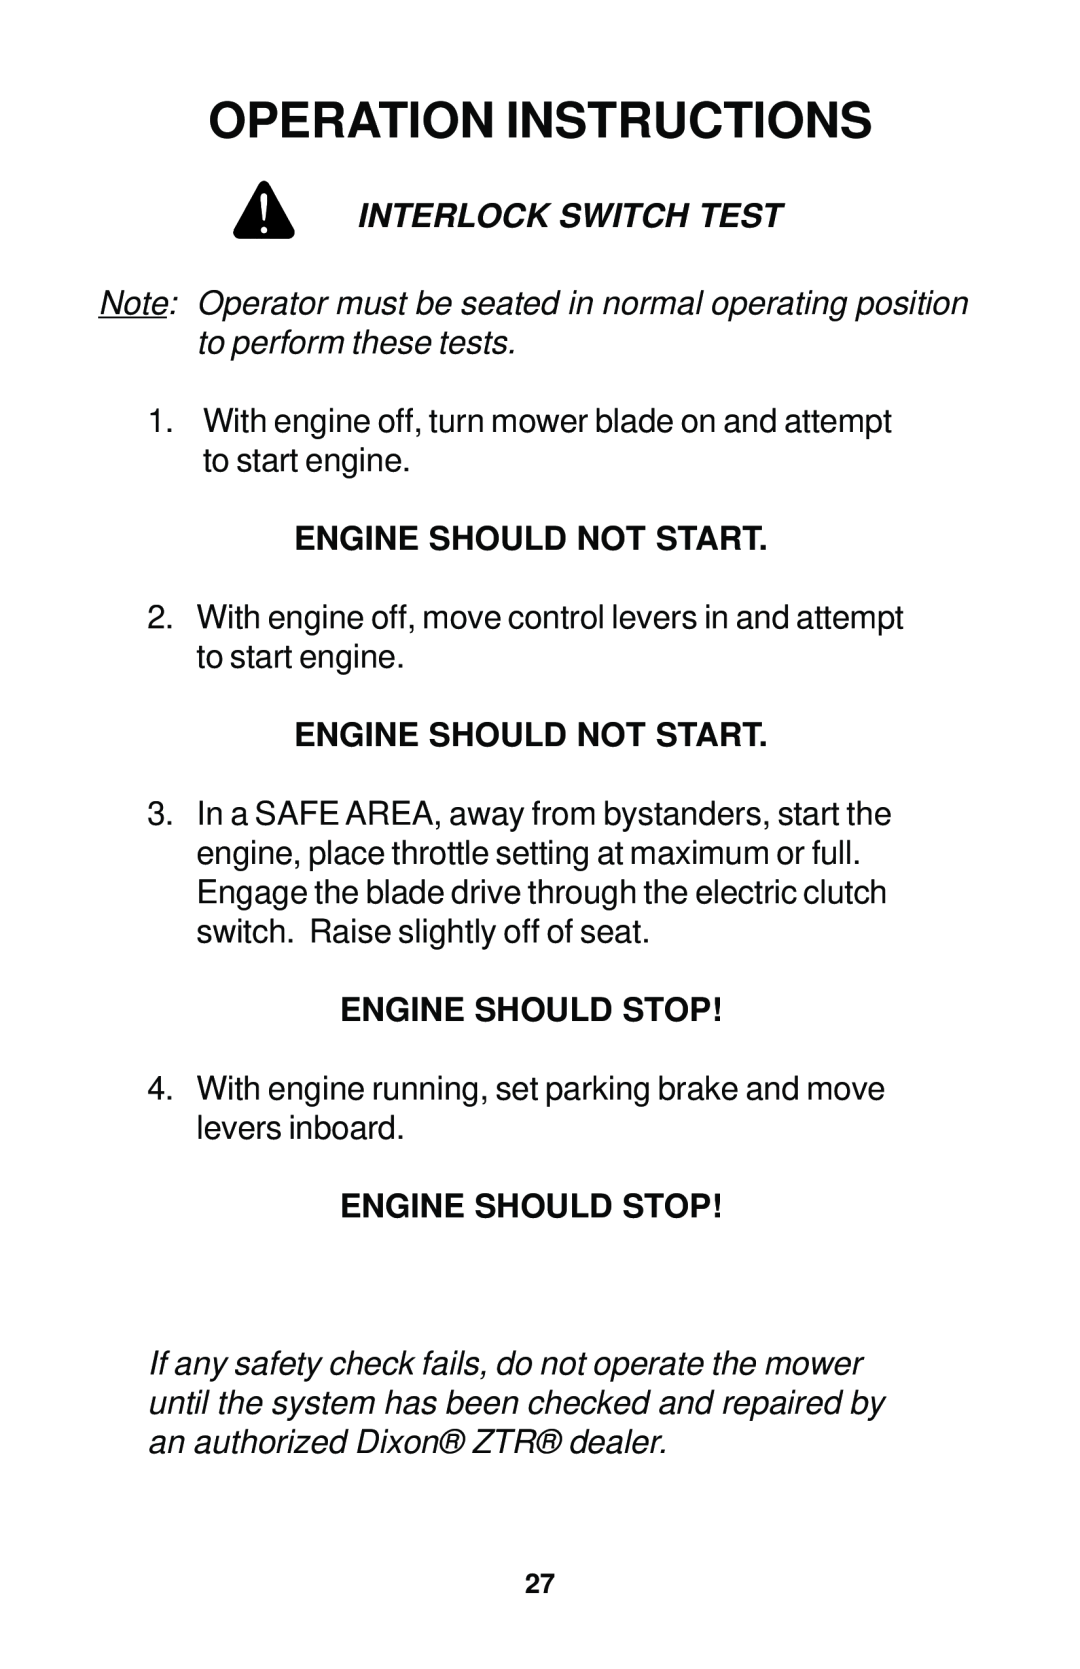 Dixon 12881-1104 manual Operation Instructions, Engine Should Not Start, Engine Should Stop 